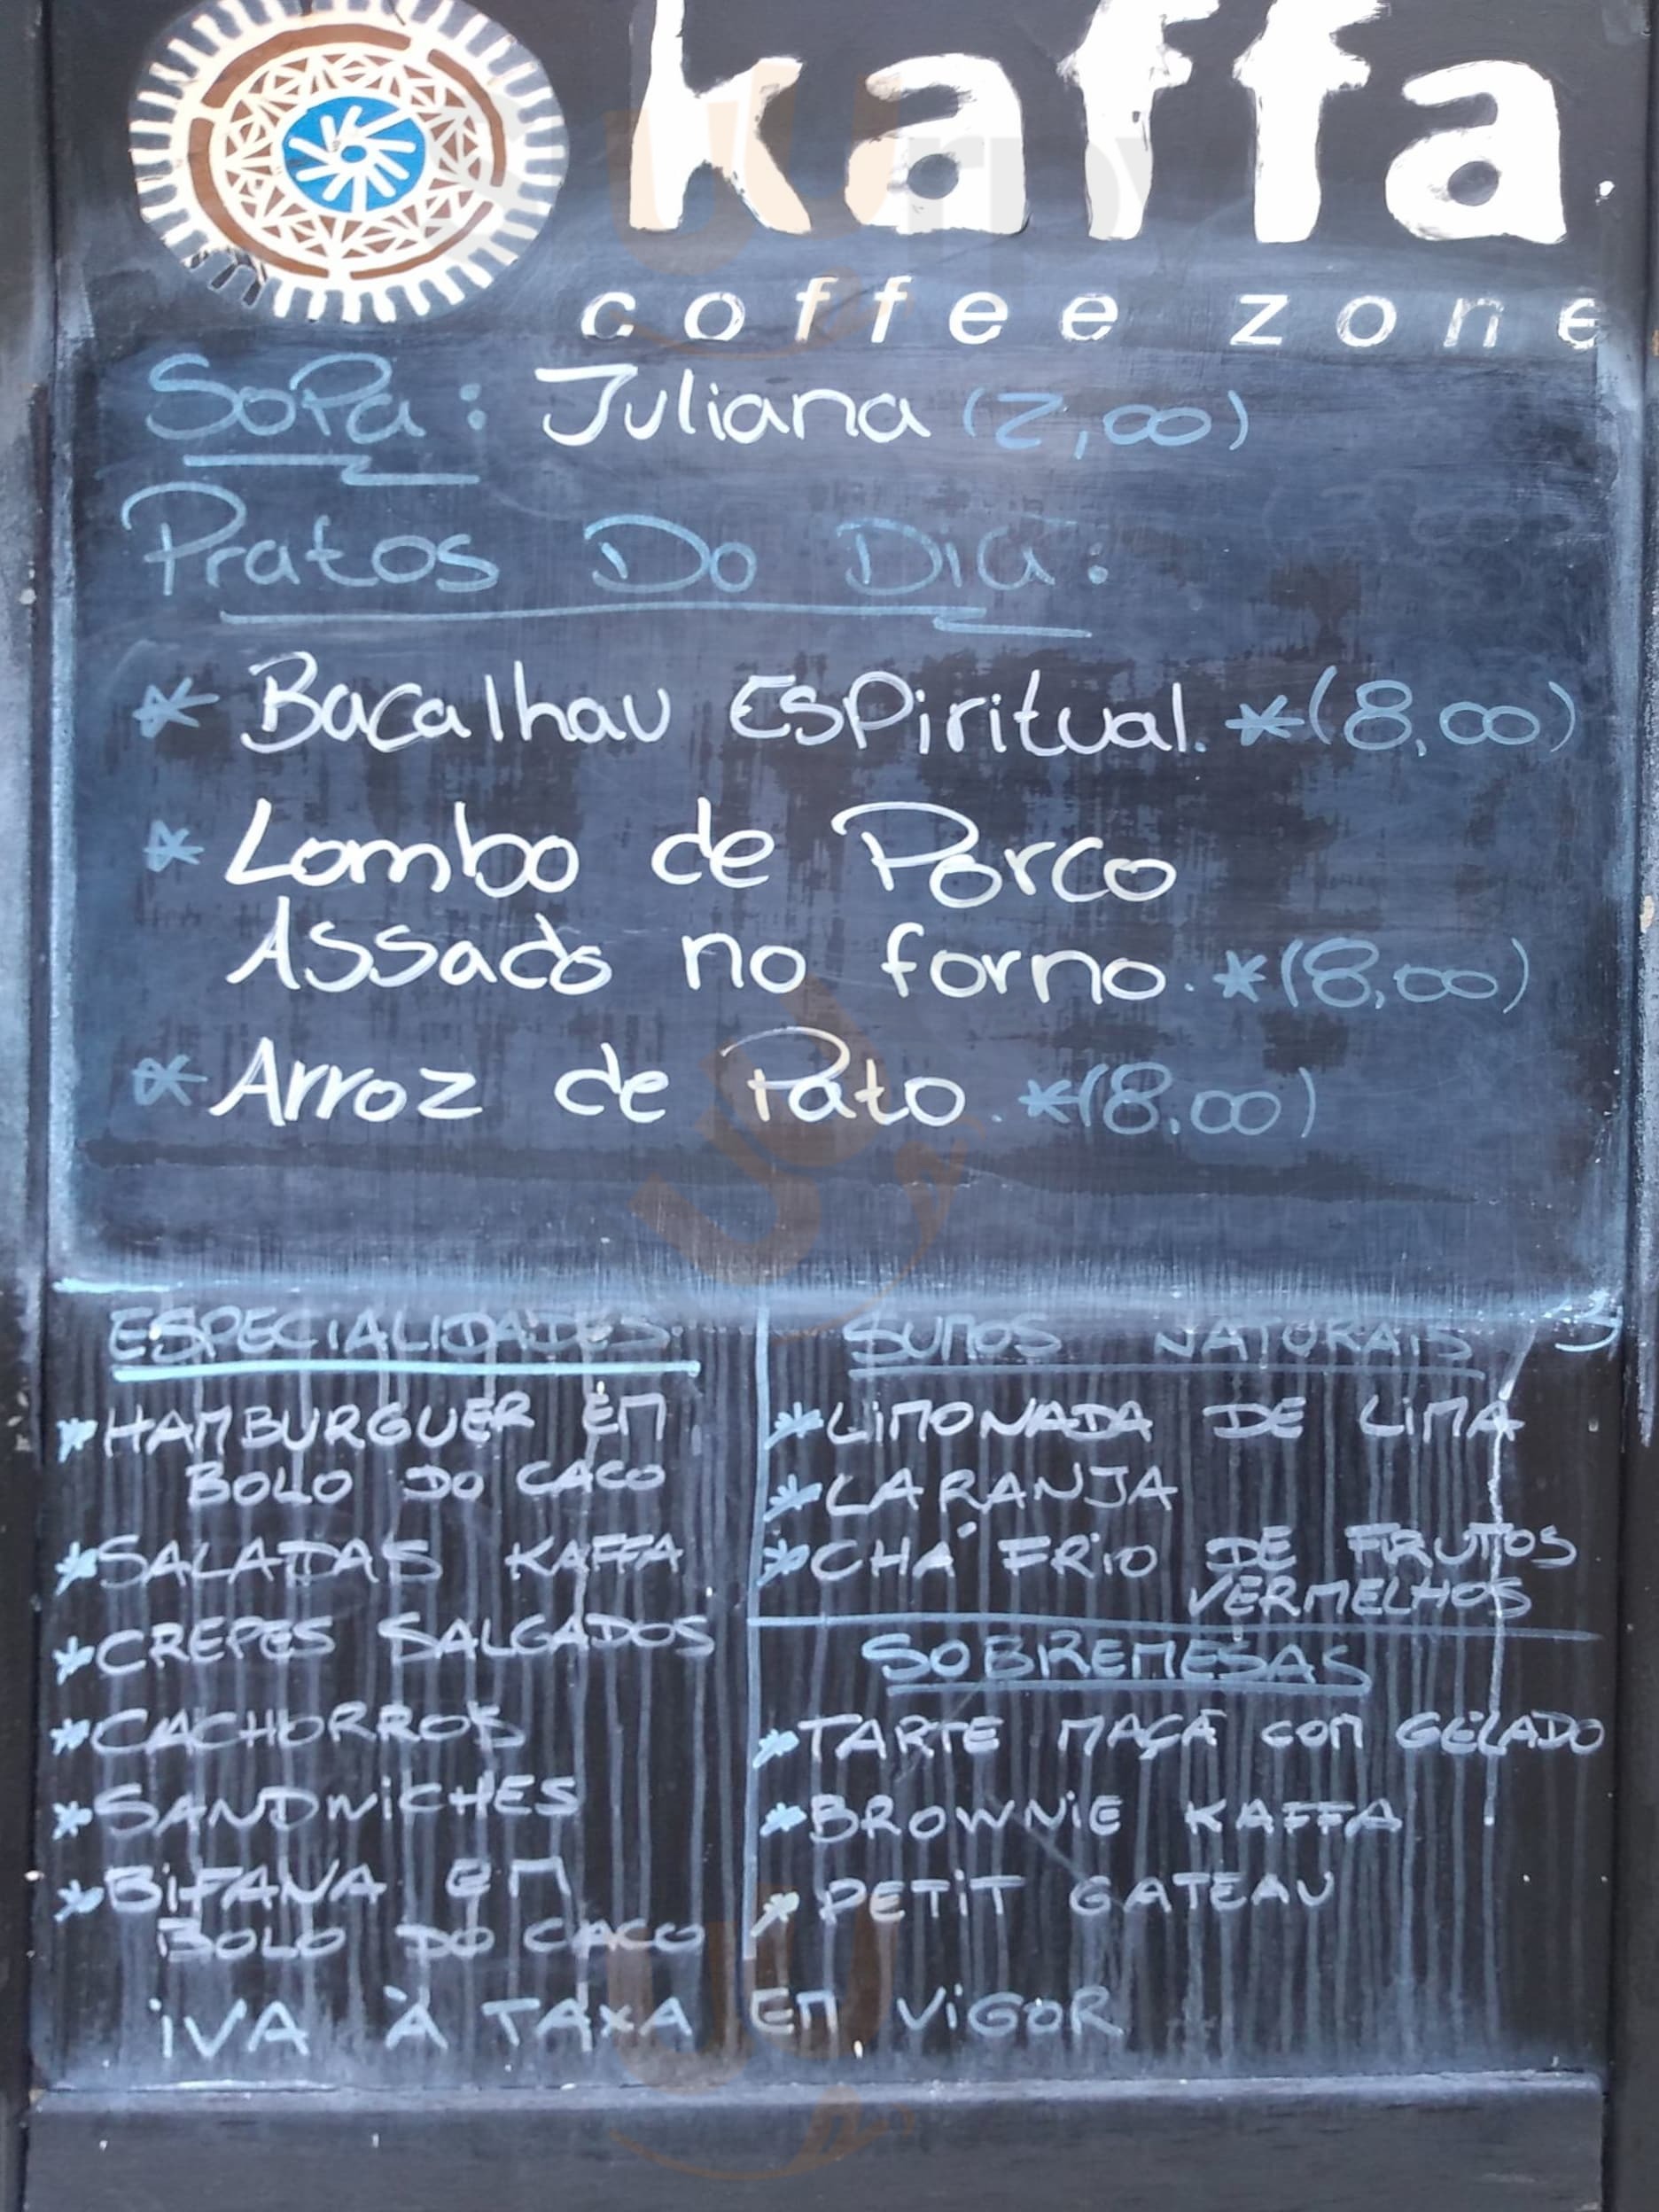 Kaffa Coffee Zone Lisboa Menu - 1